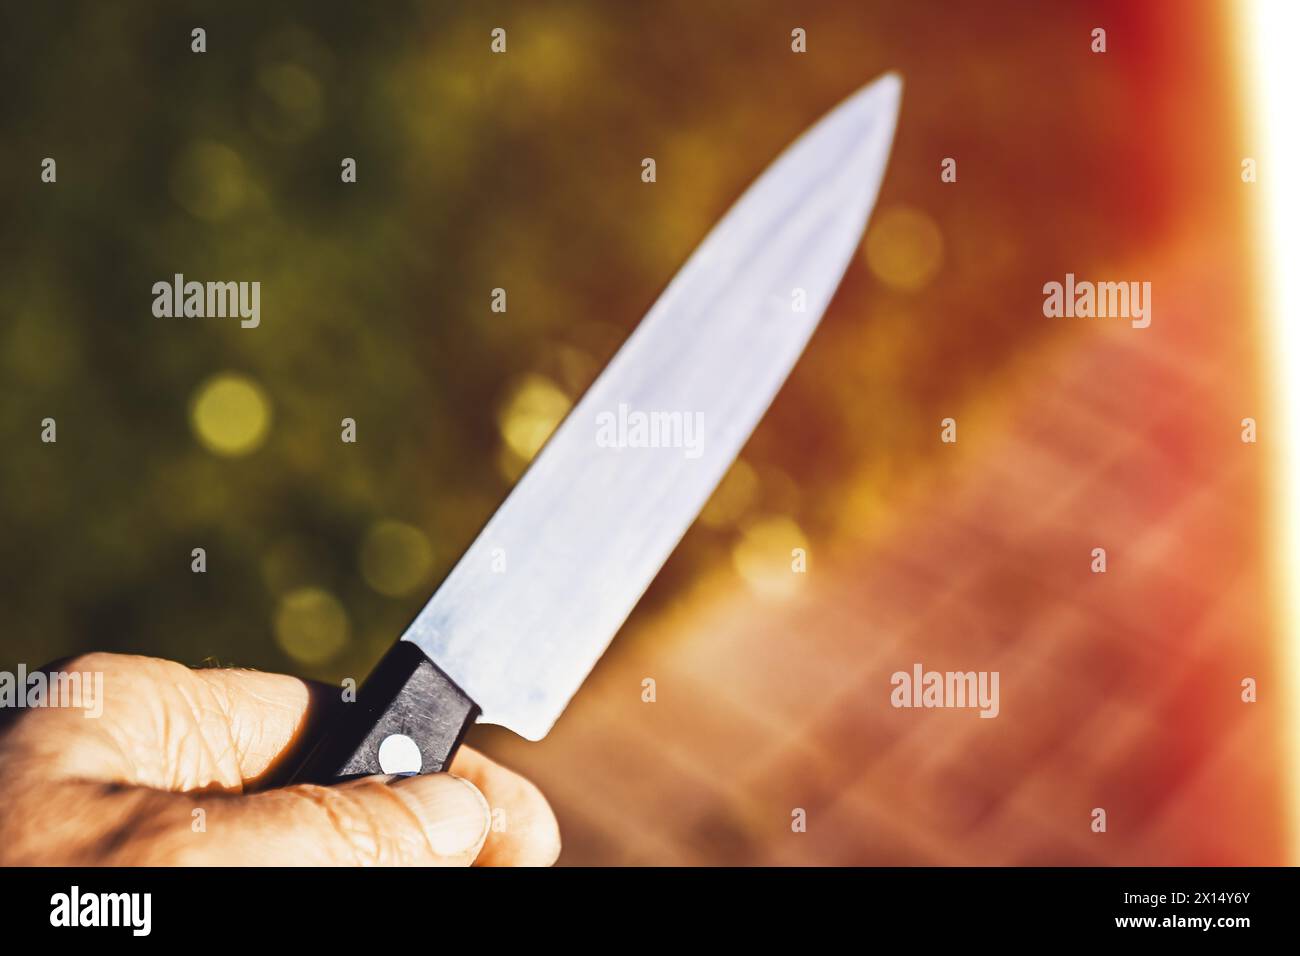 Male Hand With Knife, Symbolic Photo Crime Stock Photo